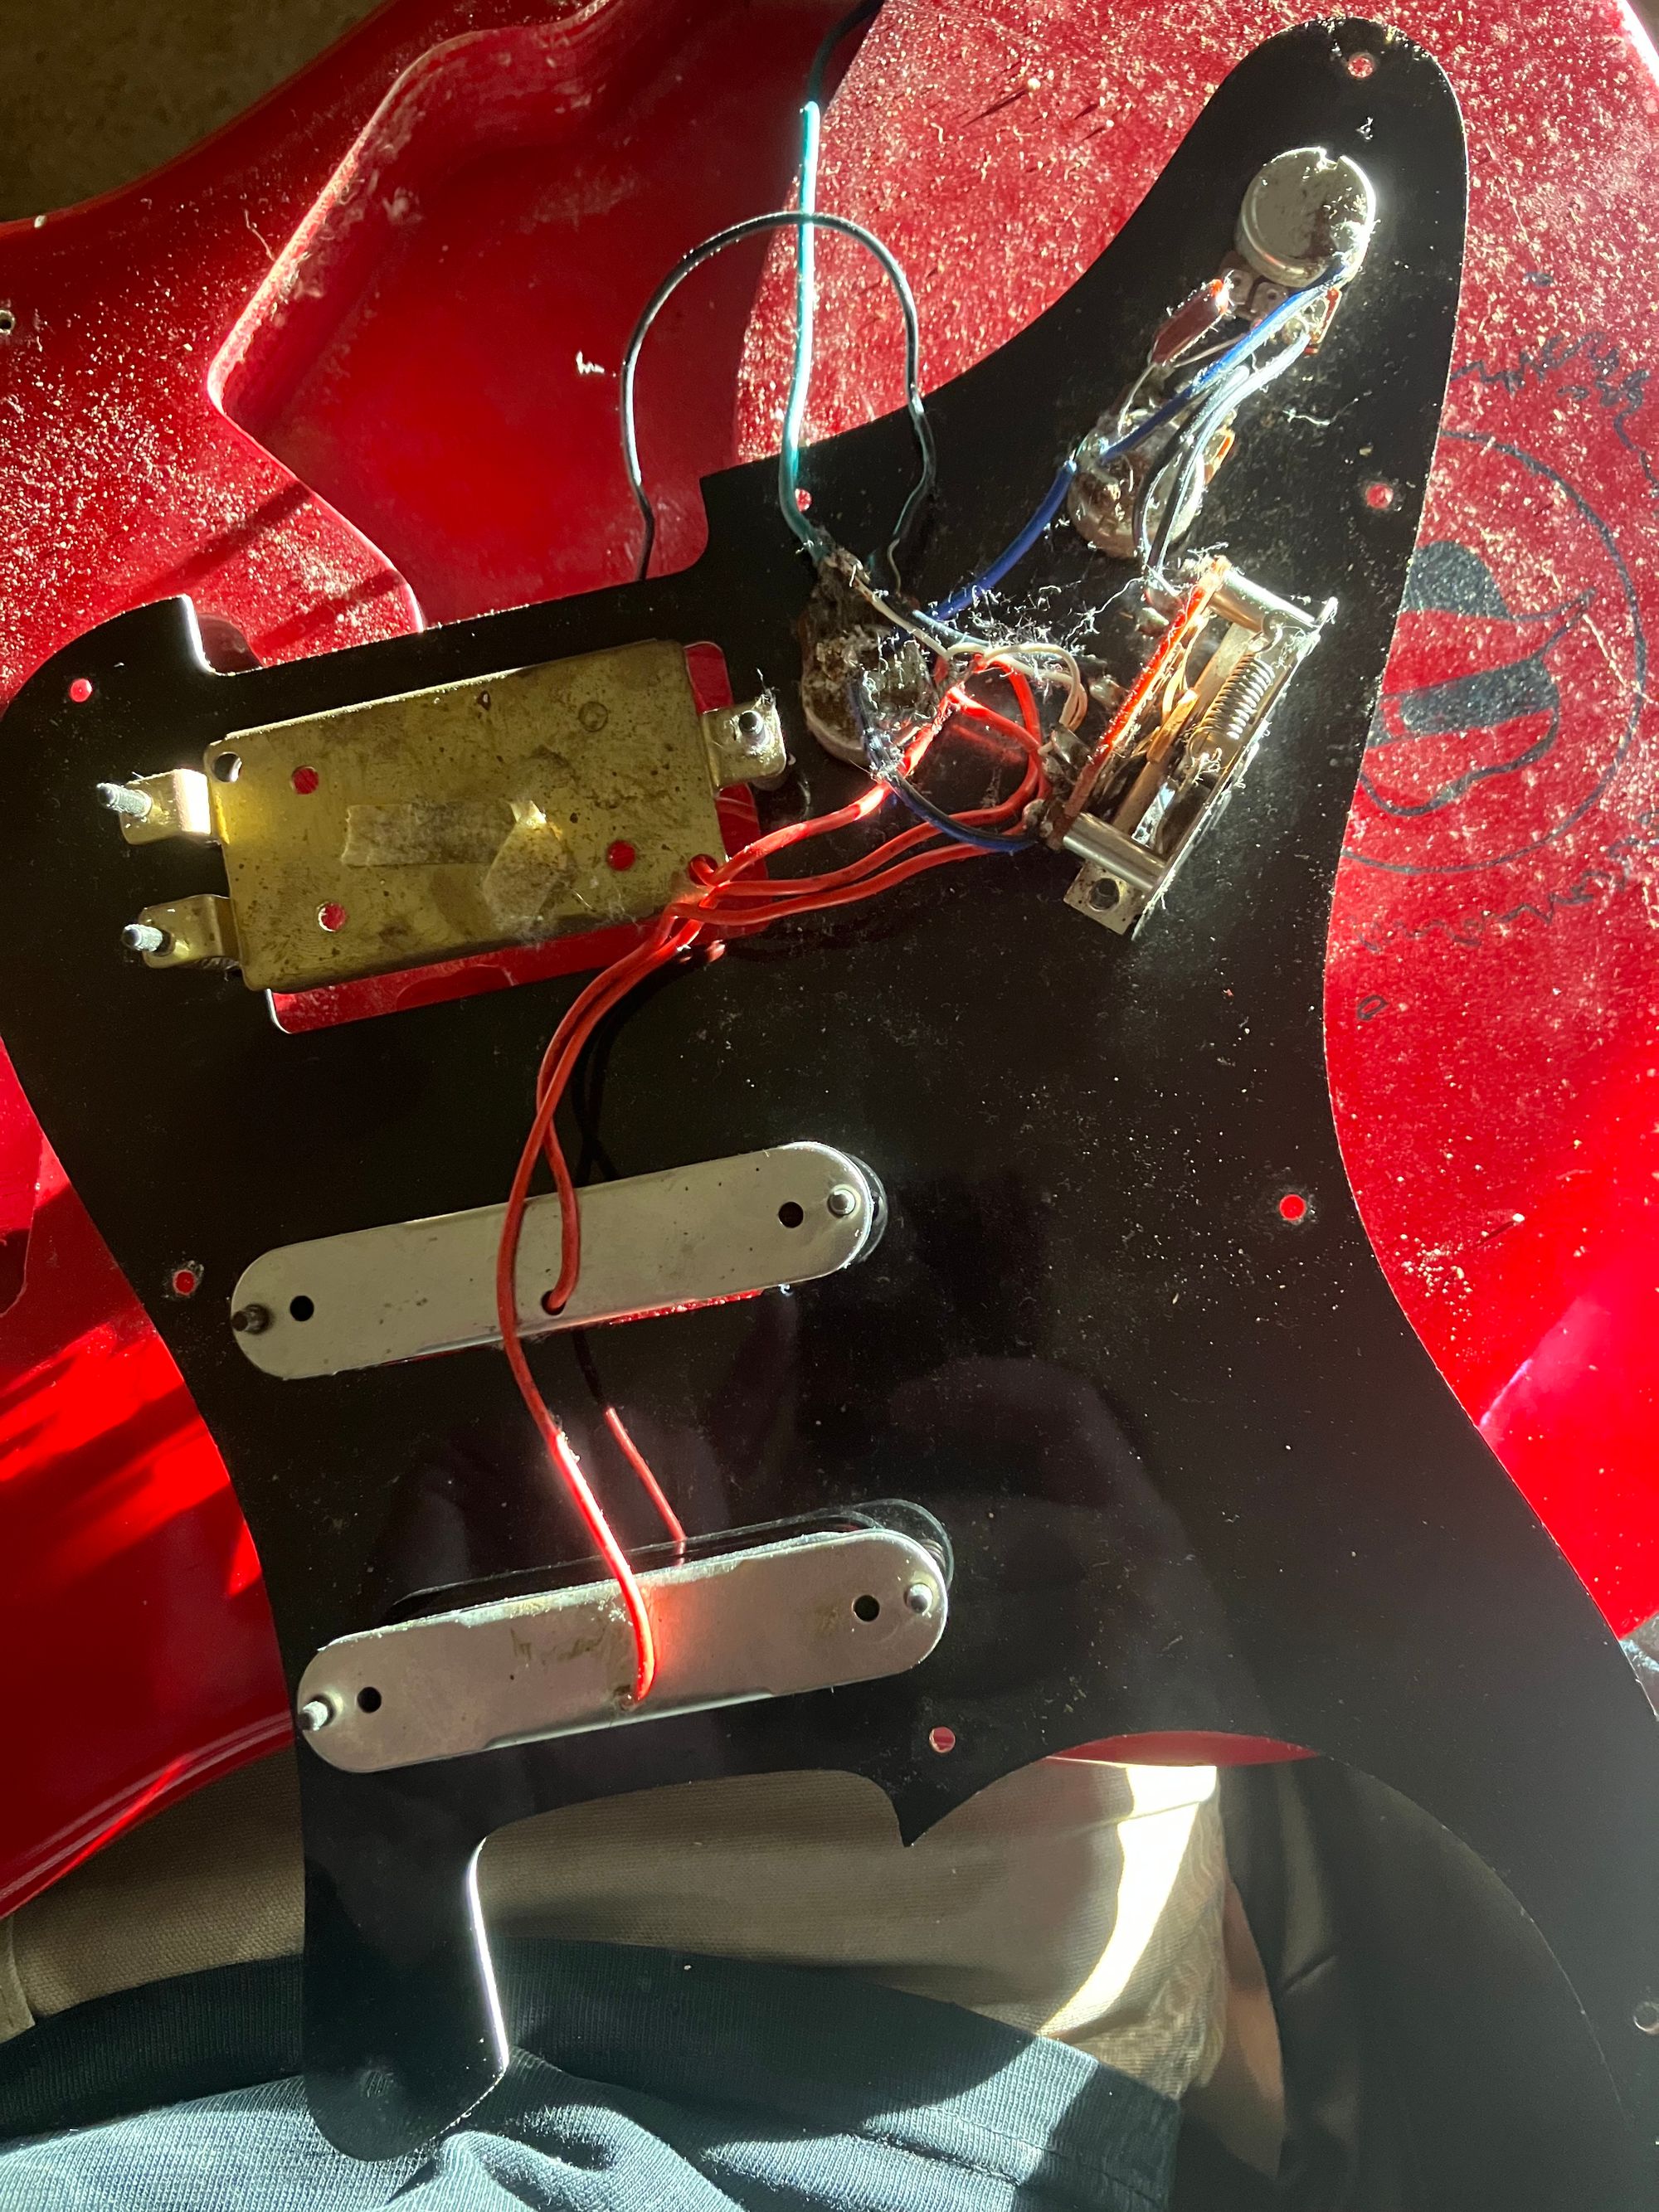 Shane Targa Guitar Restore